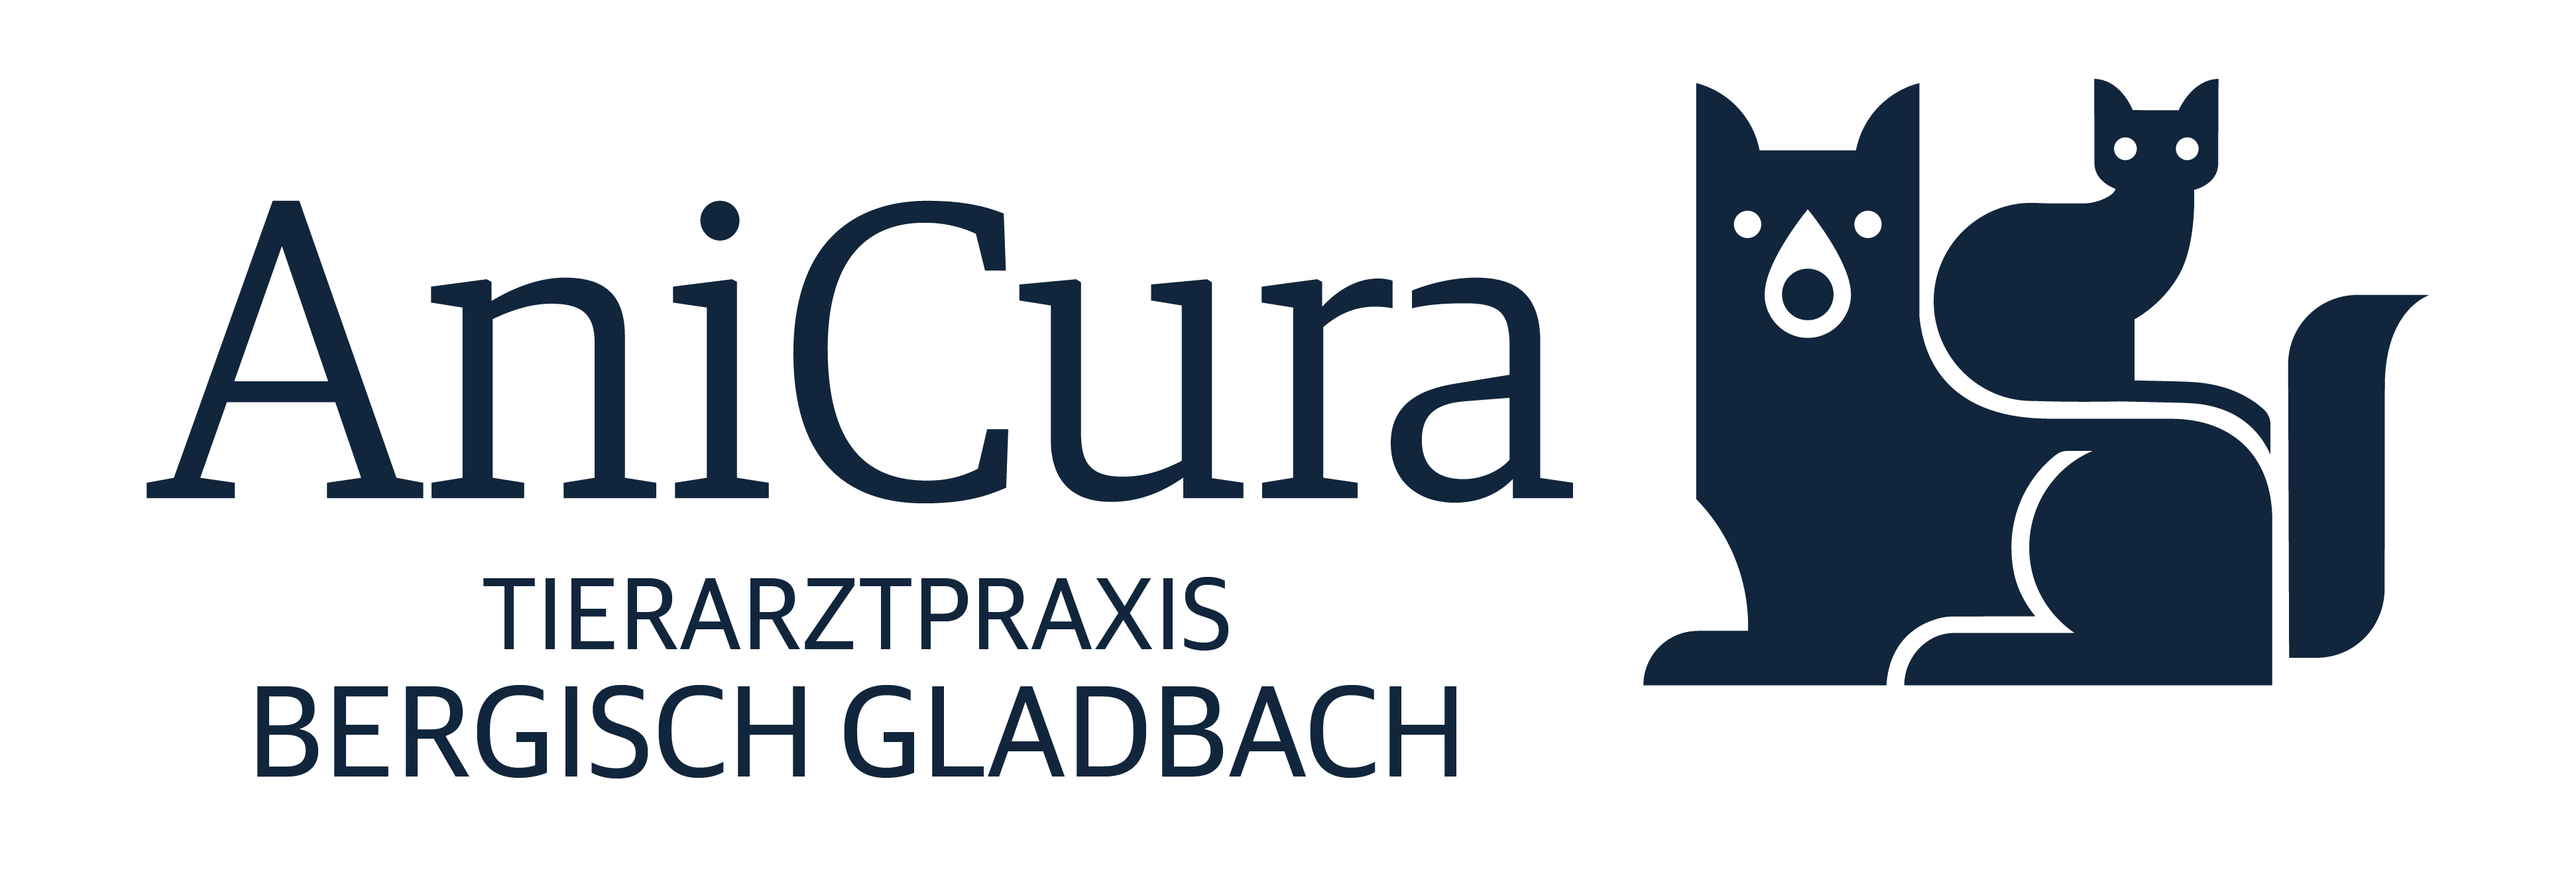 AniCura Bergisch Gladbach logo